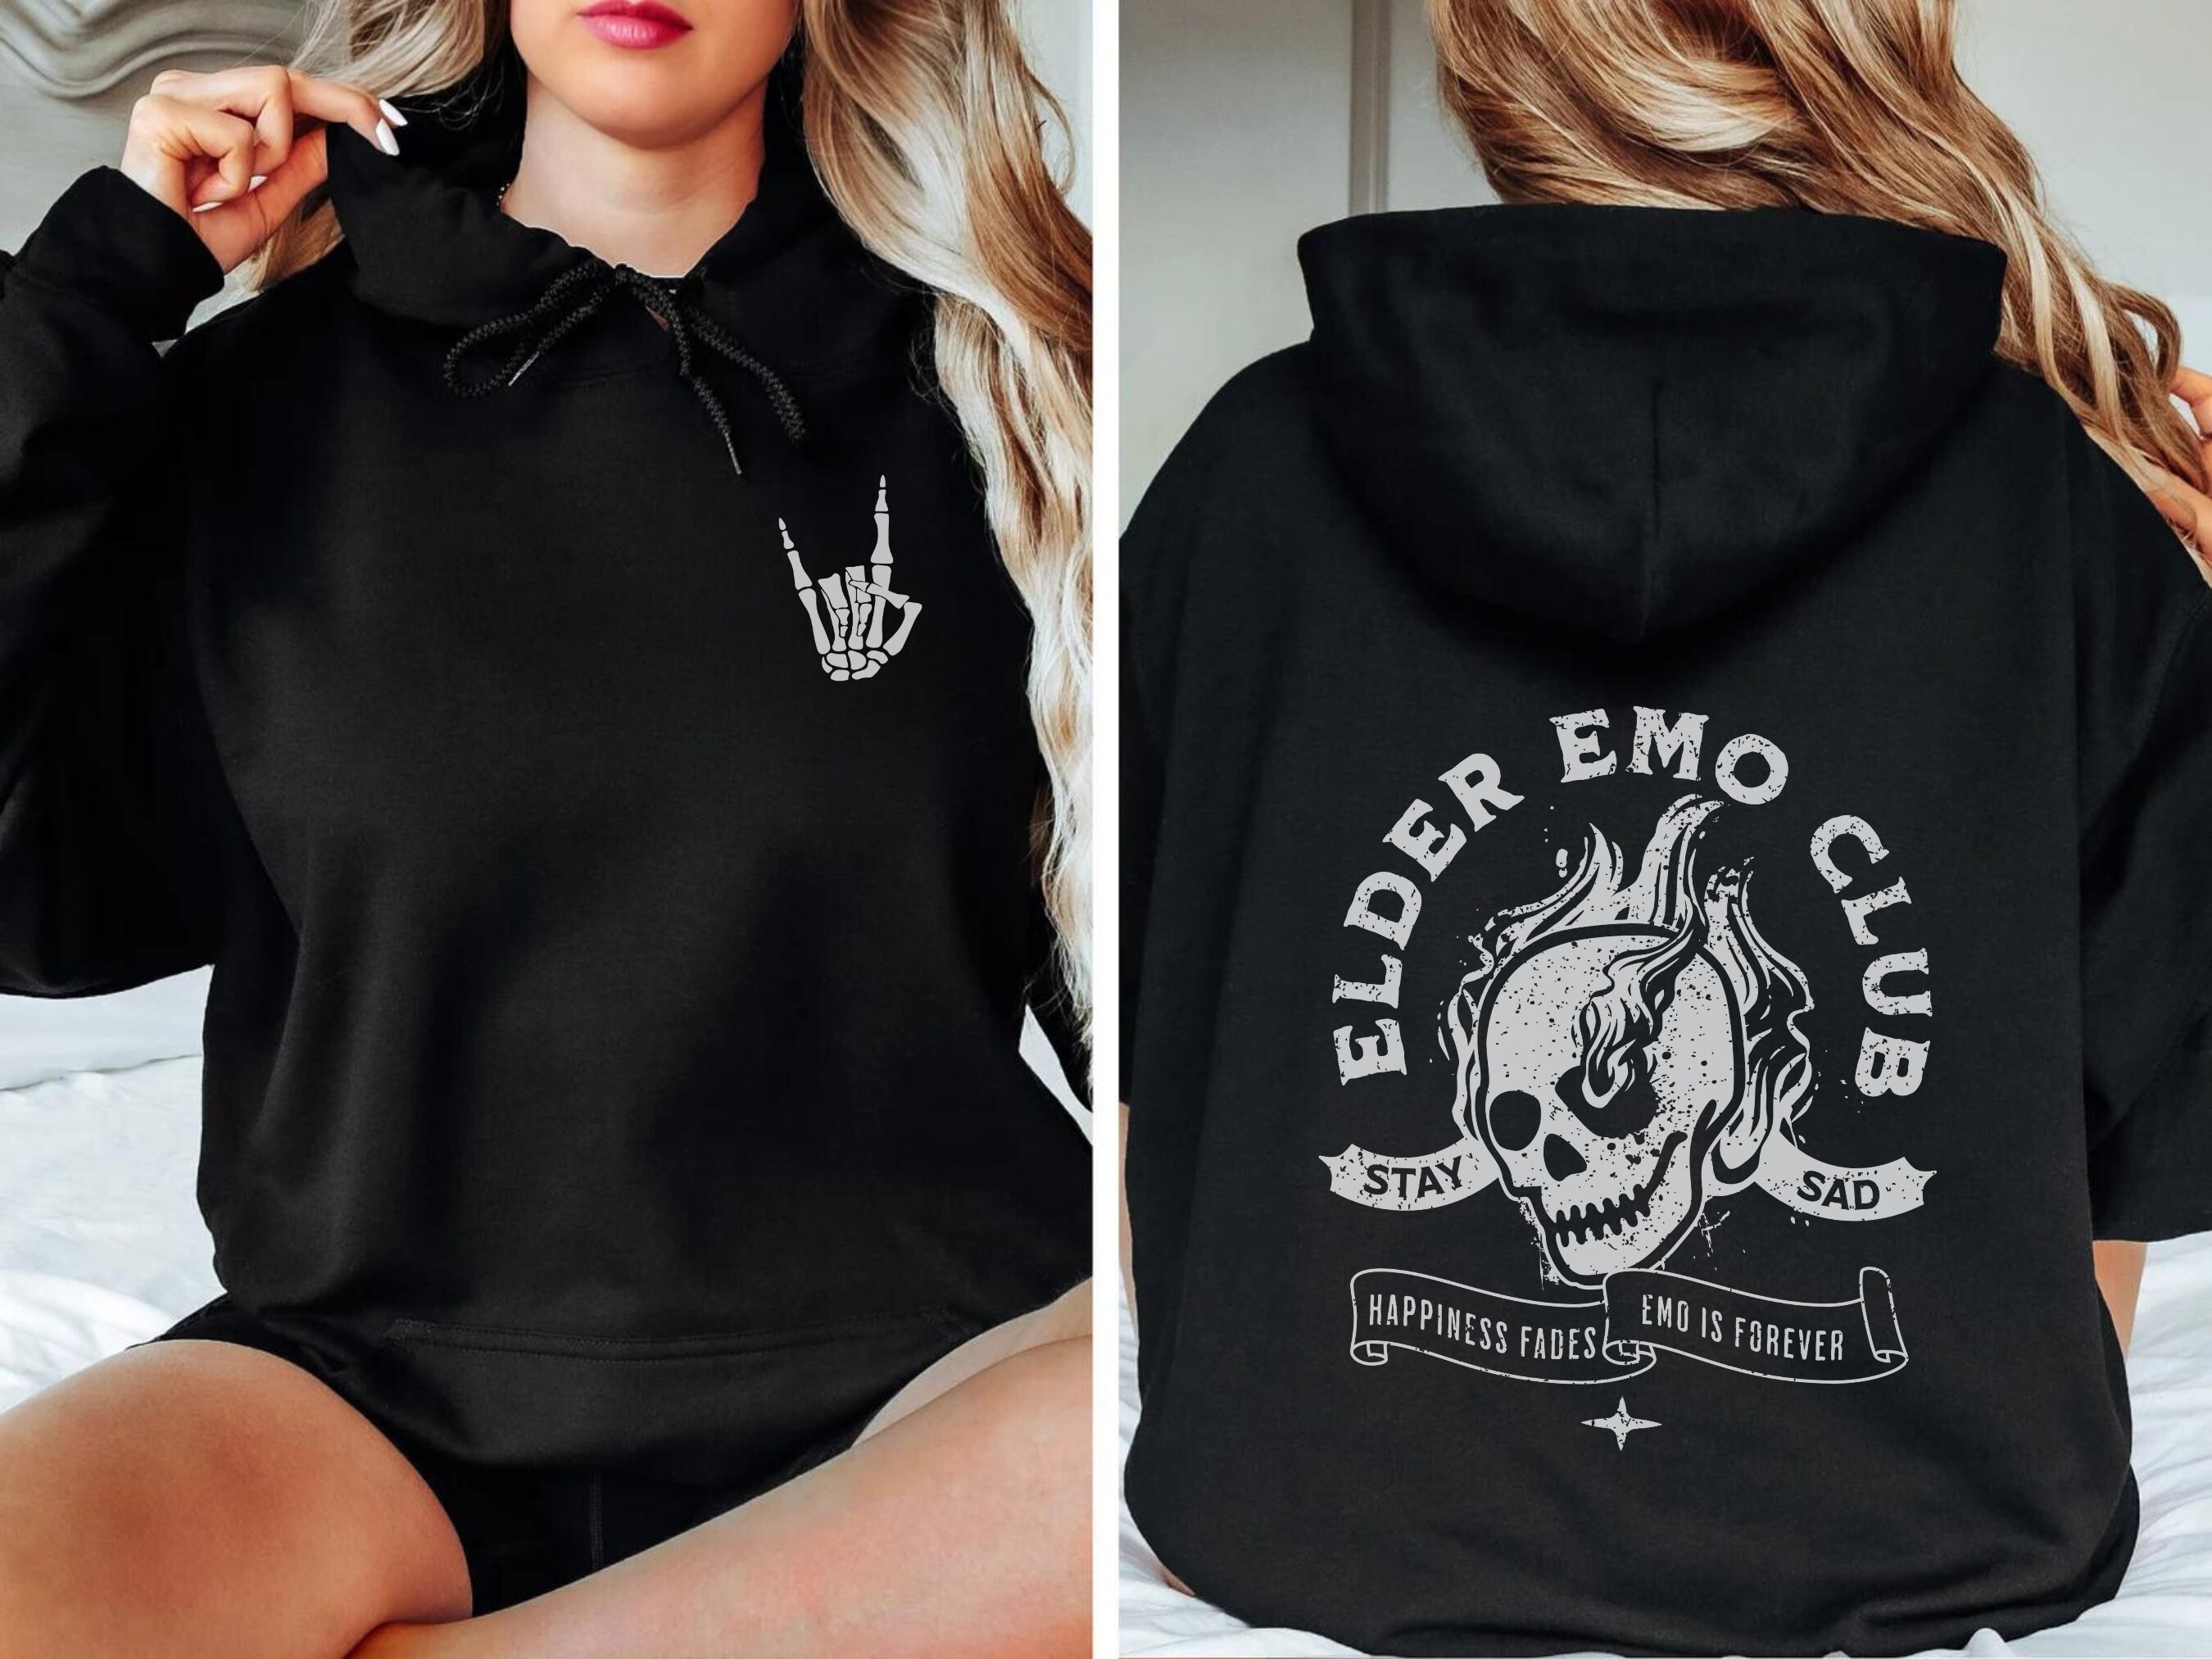 Elder Emo Club Hoodie, Elder Emo Hoodie, Emo Hoodie, Emo Clothing